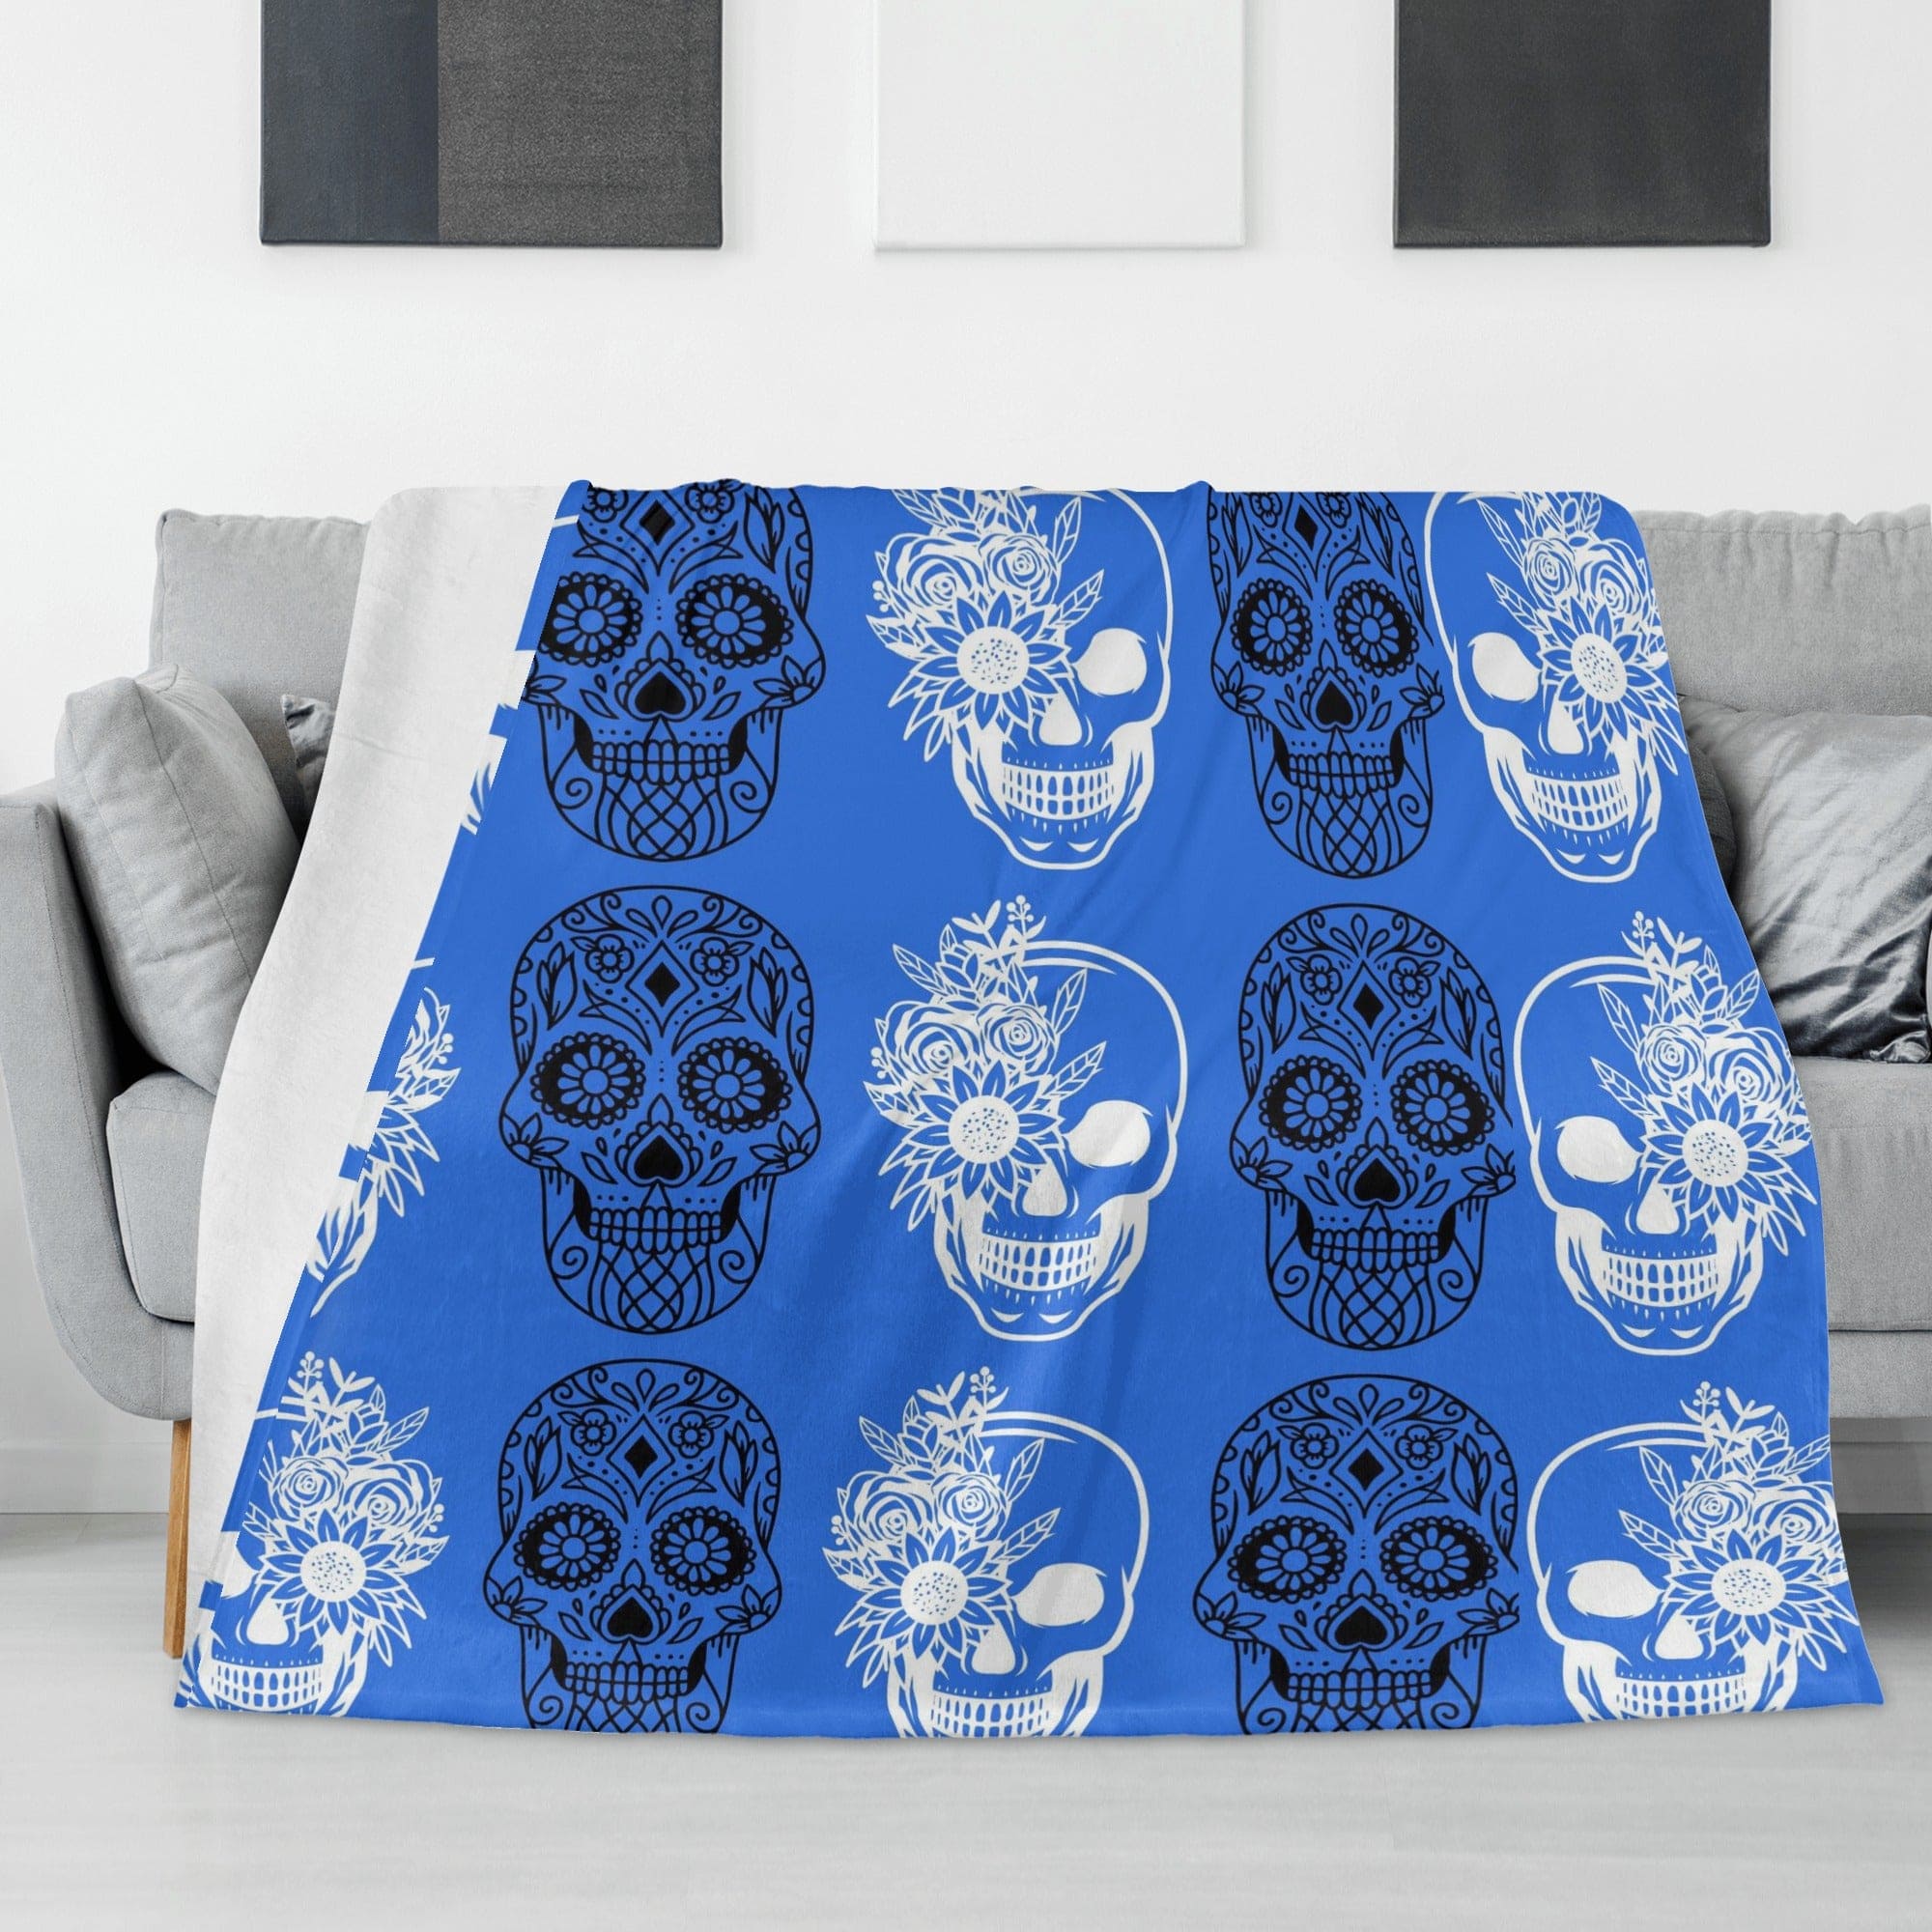 Skulls Horizontal Flannel Breathable Blanket 4 Sizes